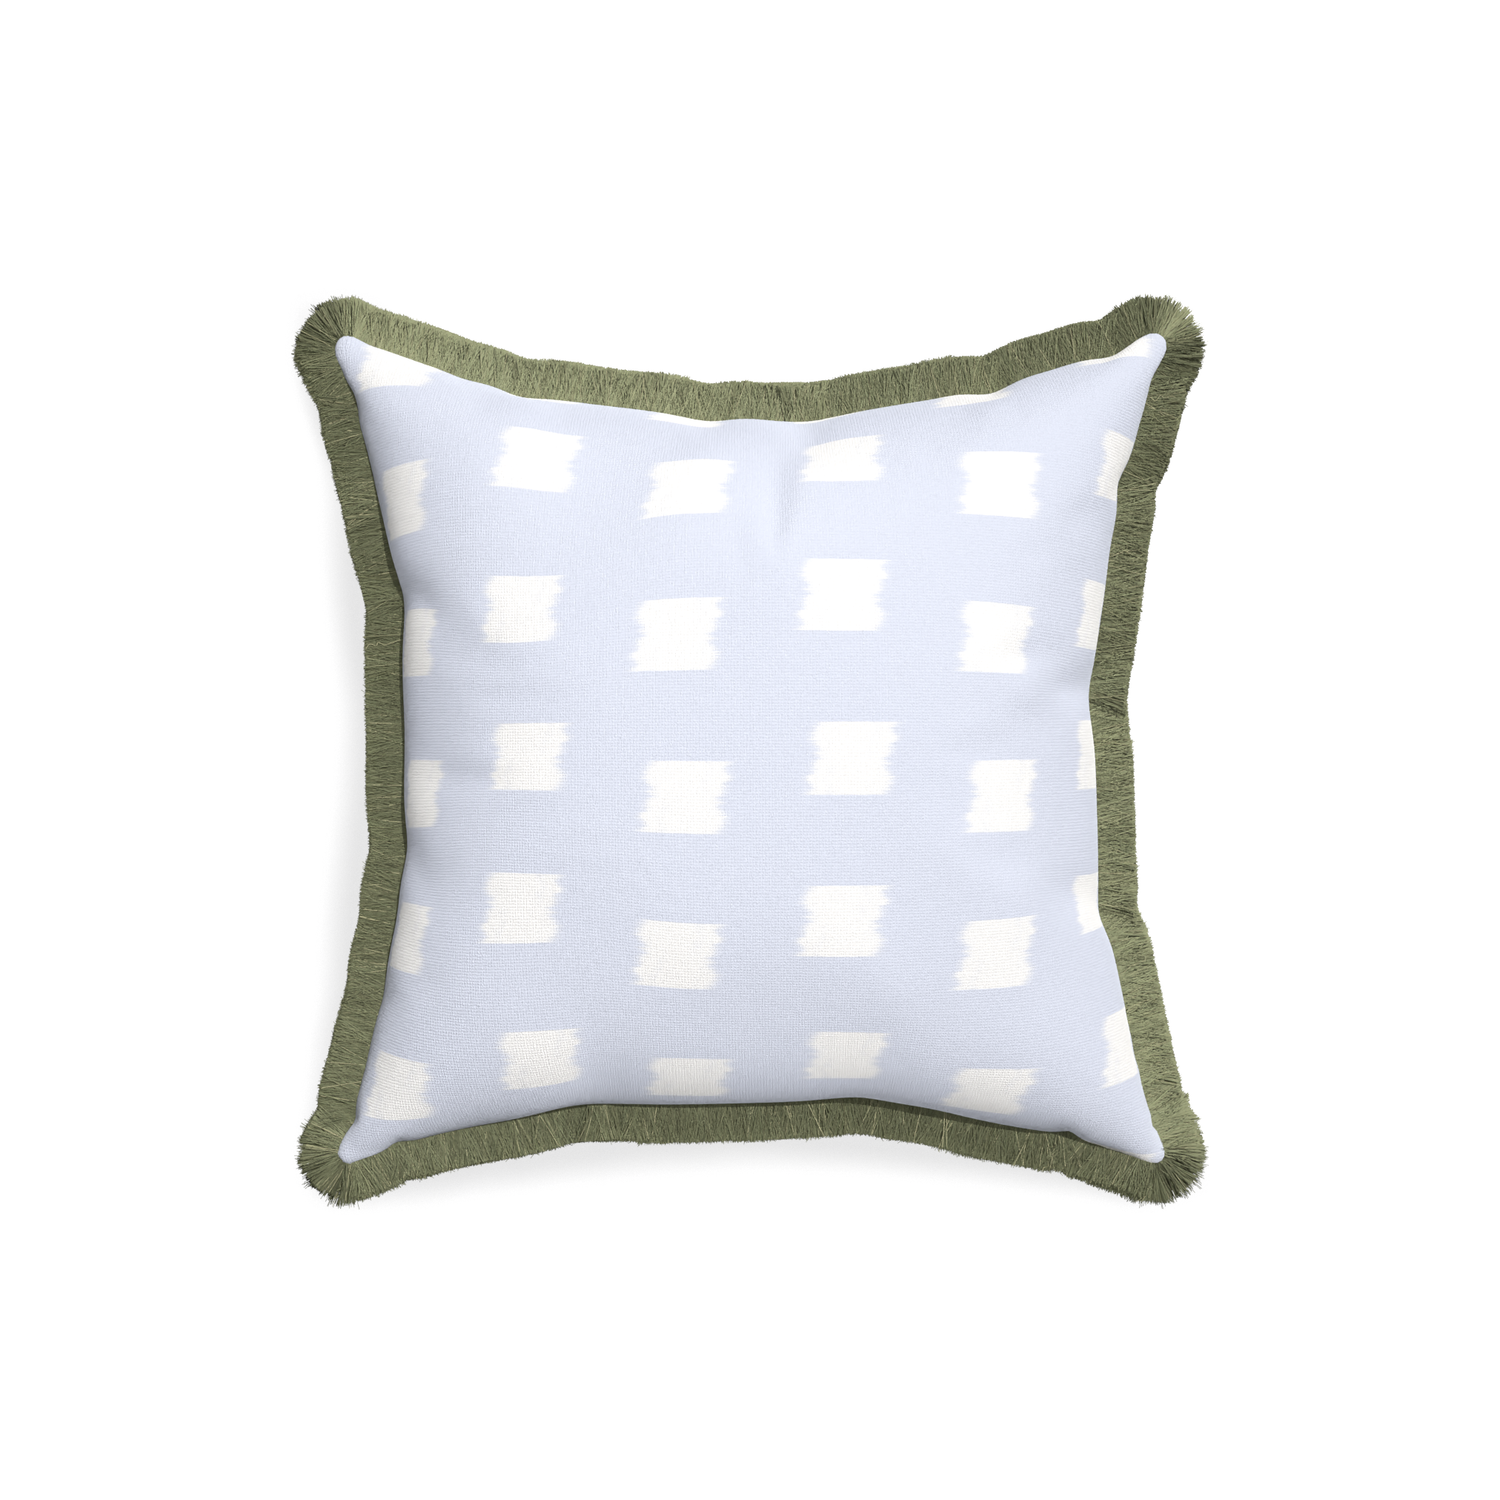 18-square denton custom pillow with sage fringe on white background